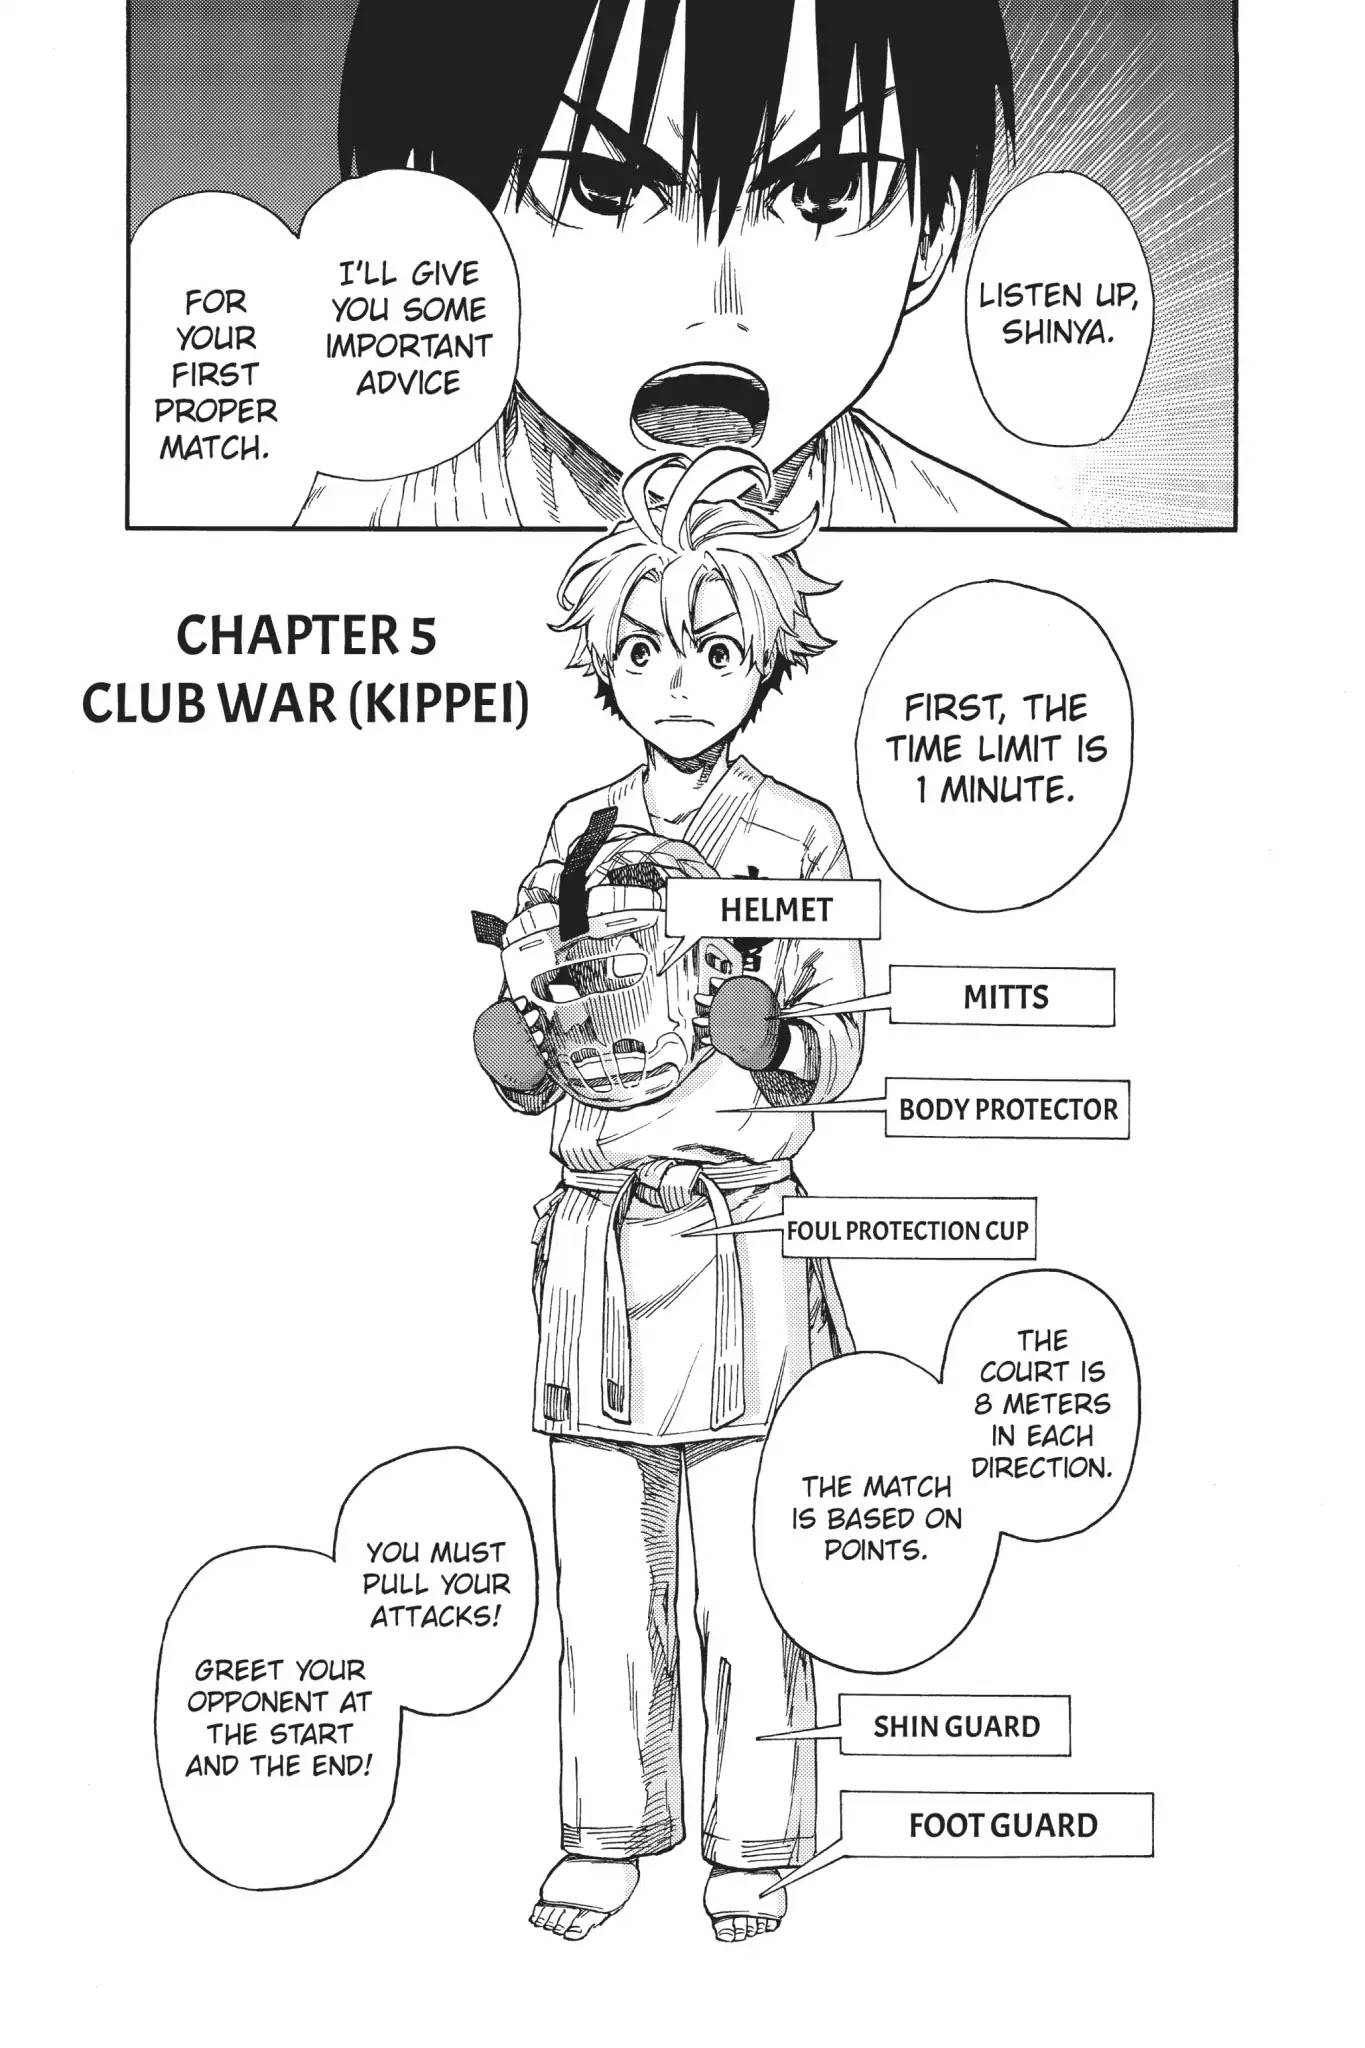 Tenohira no Netsu wo Chapter 5: Club War (Kippei)